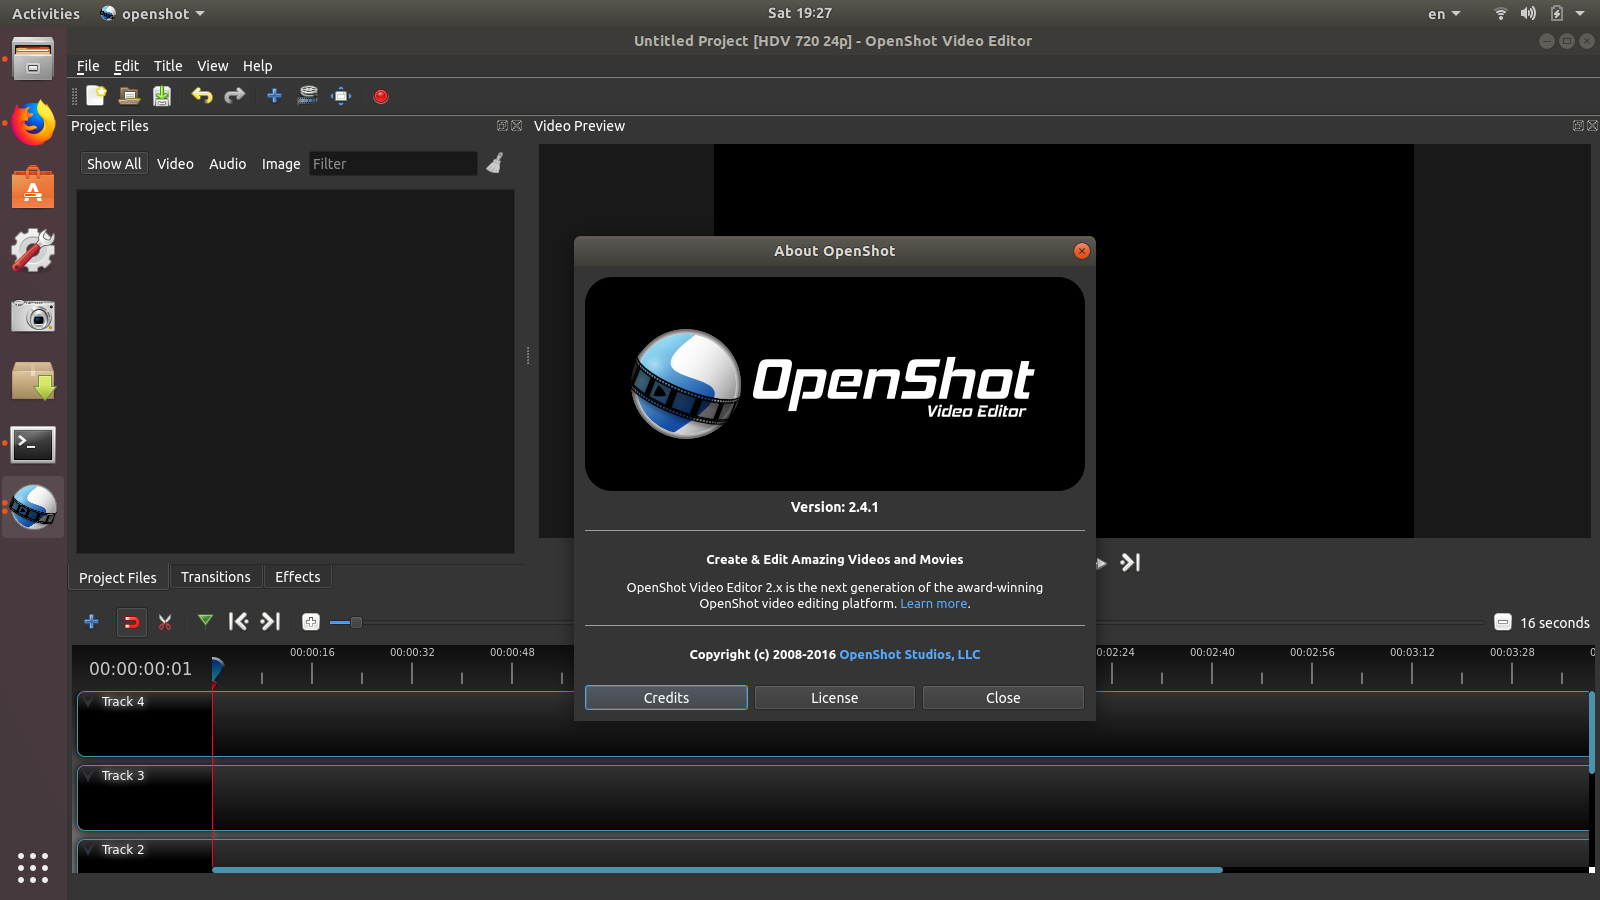 openshot video editor ubuntu download